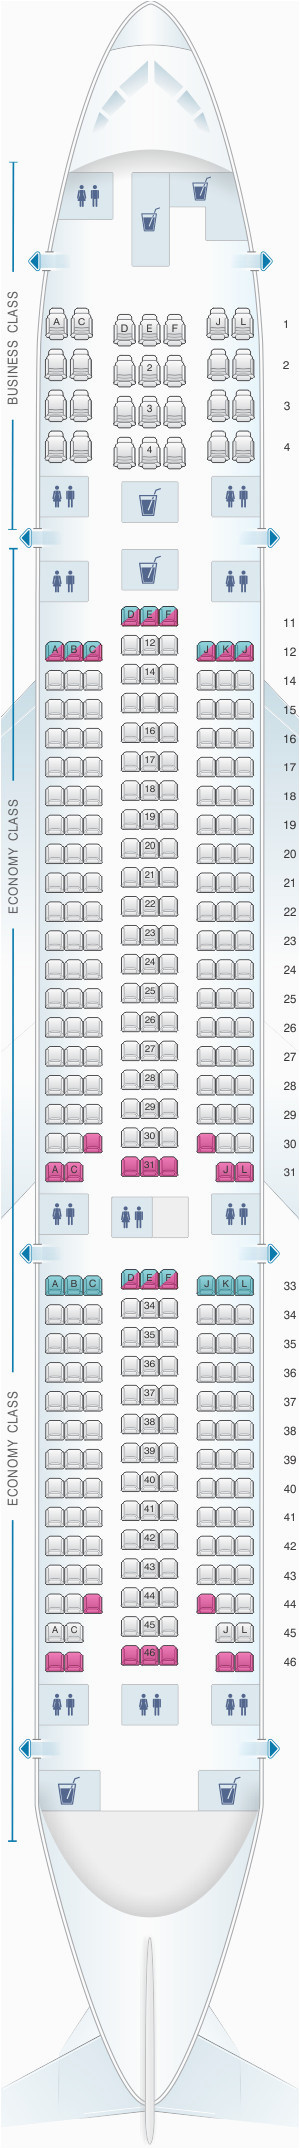 american airline seating chart unique seatguru seat map air france